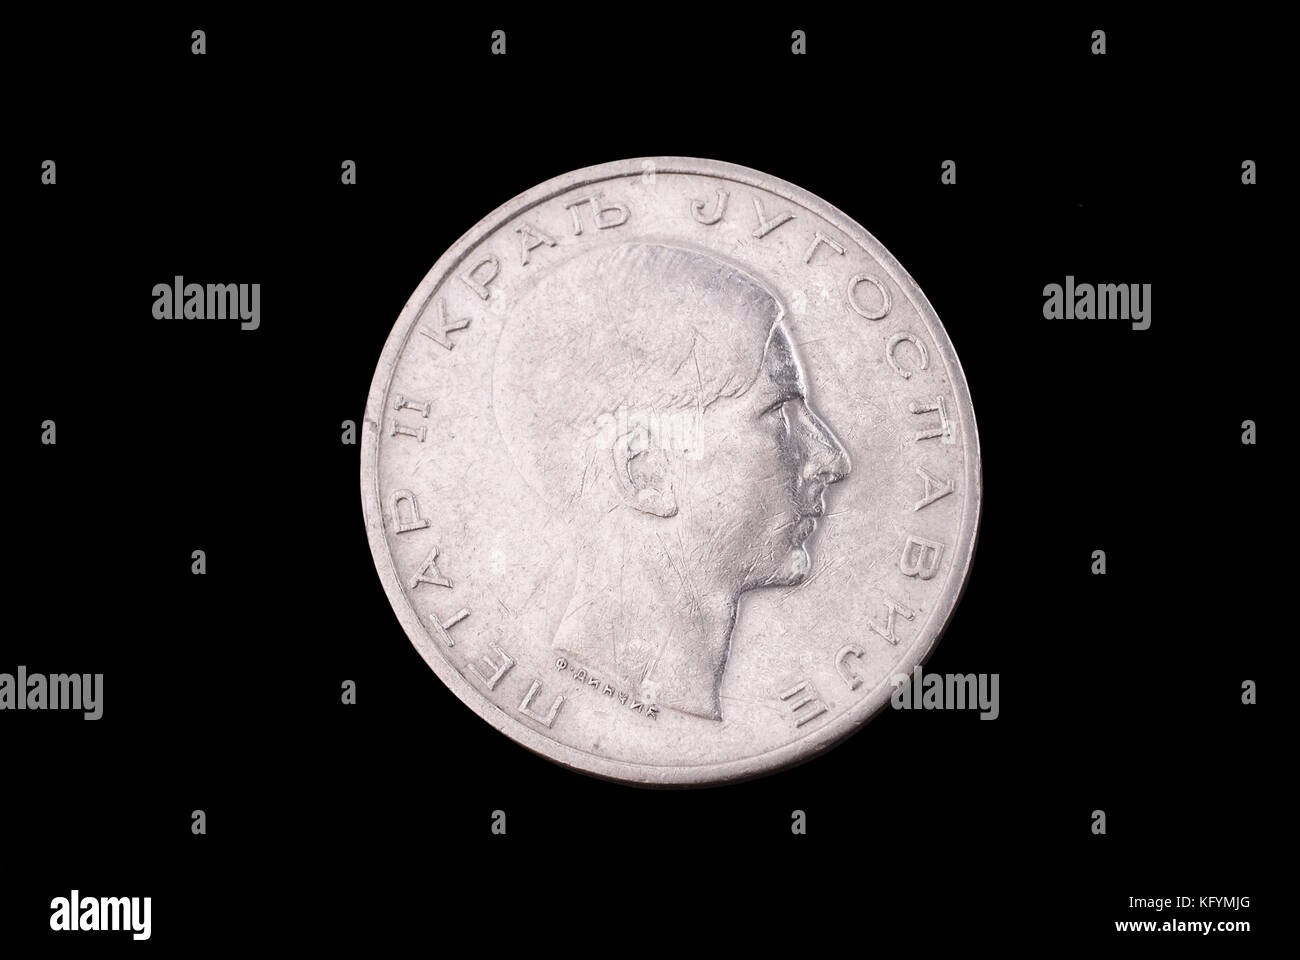 Regno Iugoslavia antica moneta d'argento (re petr ii, 50 dinar, 1938). complementare (di moneta). Foto Stock